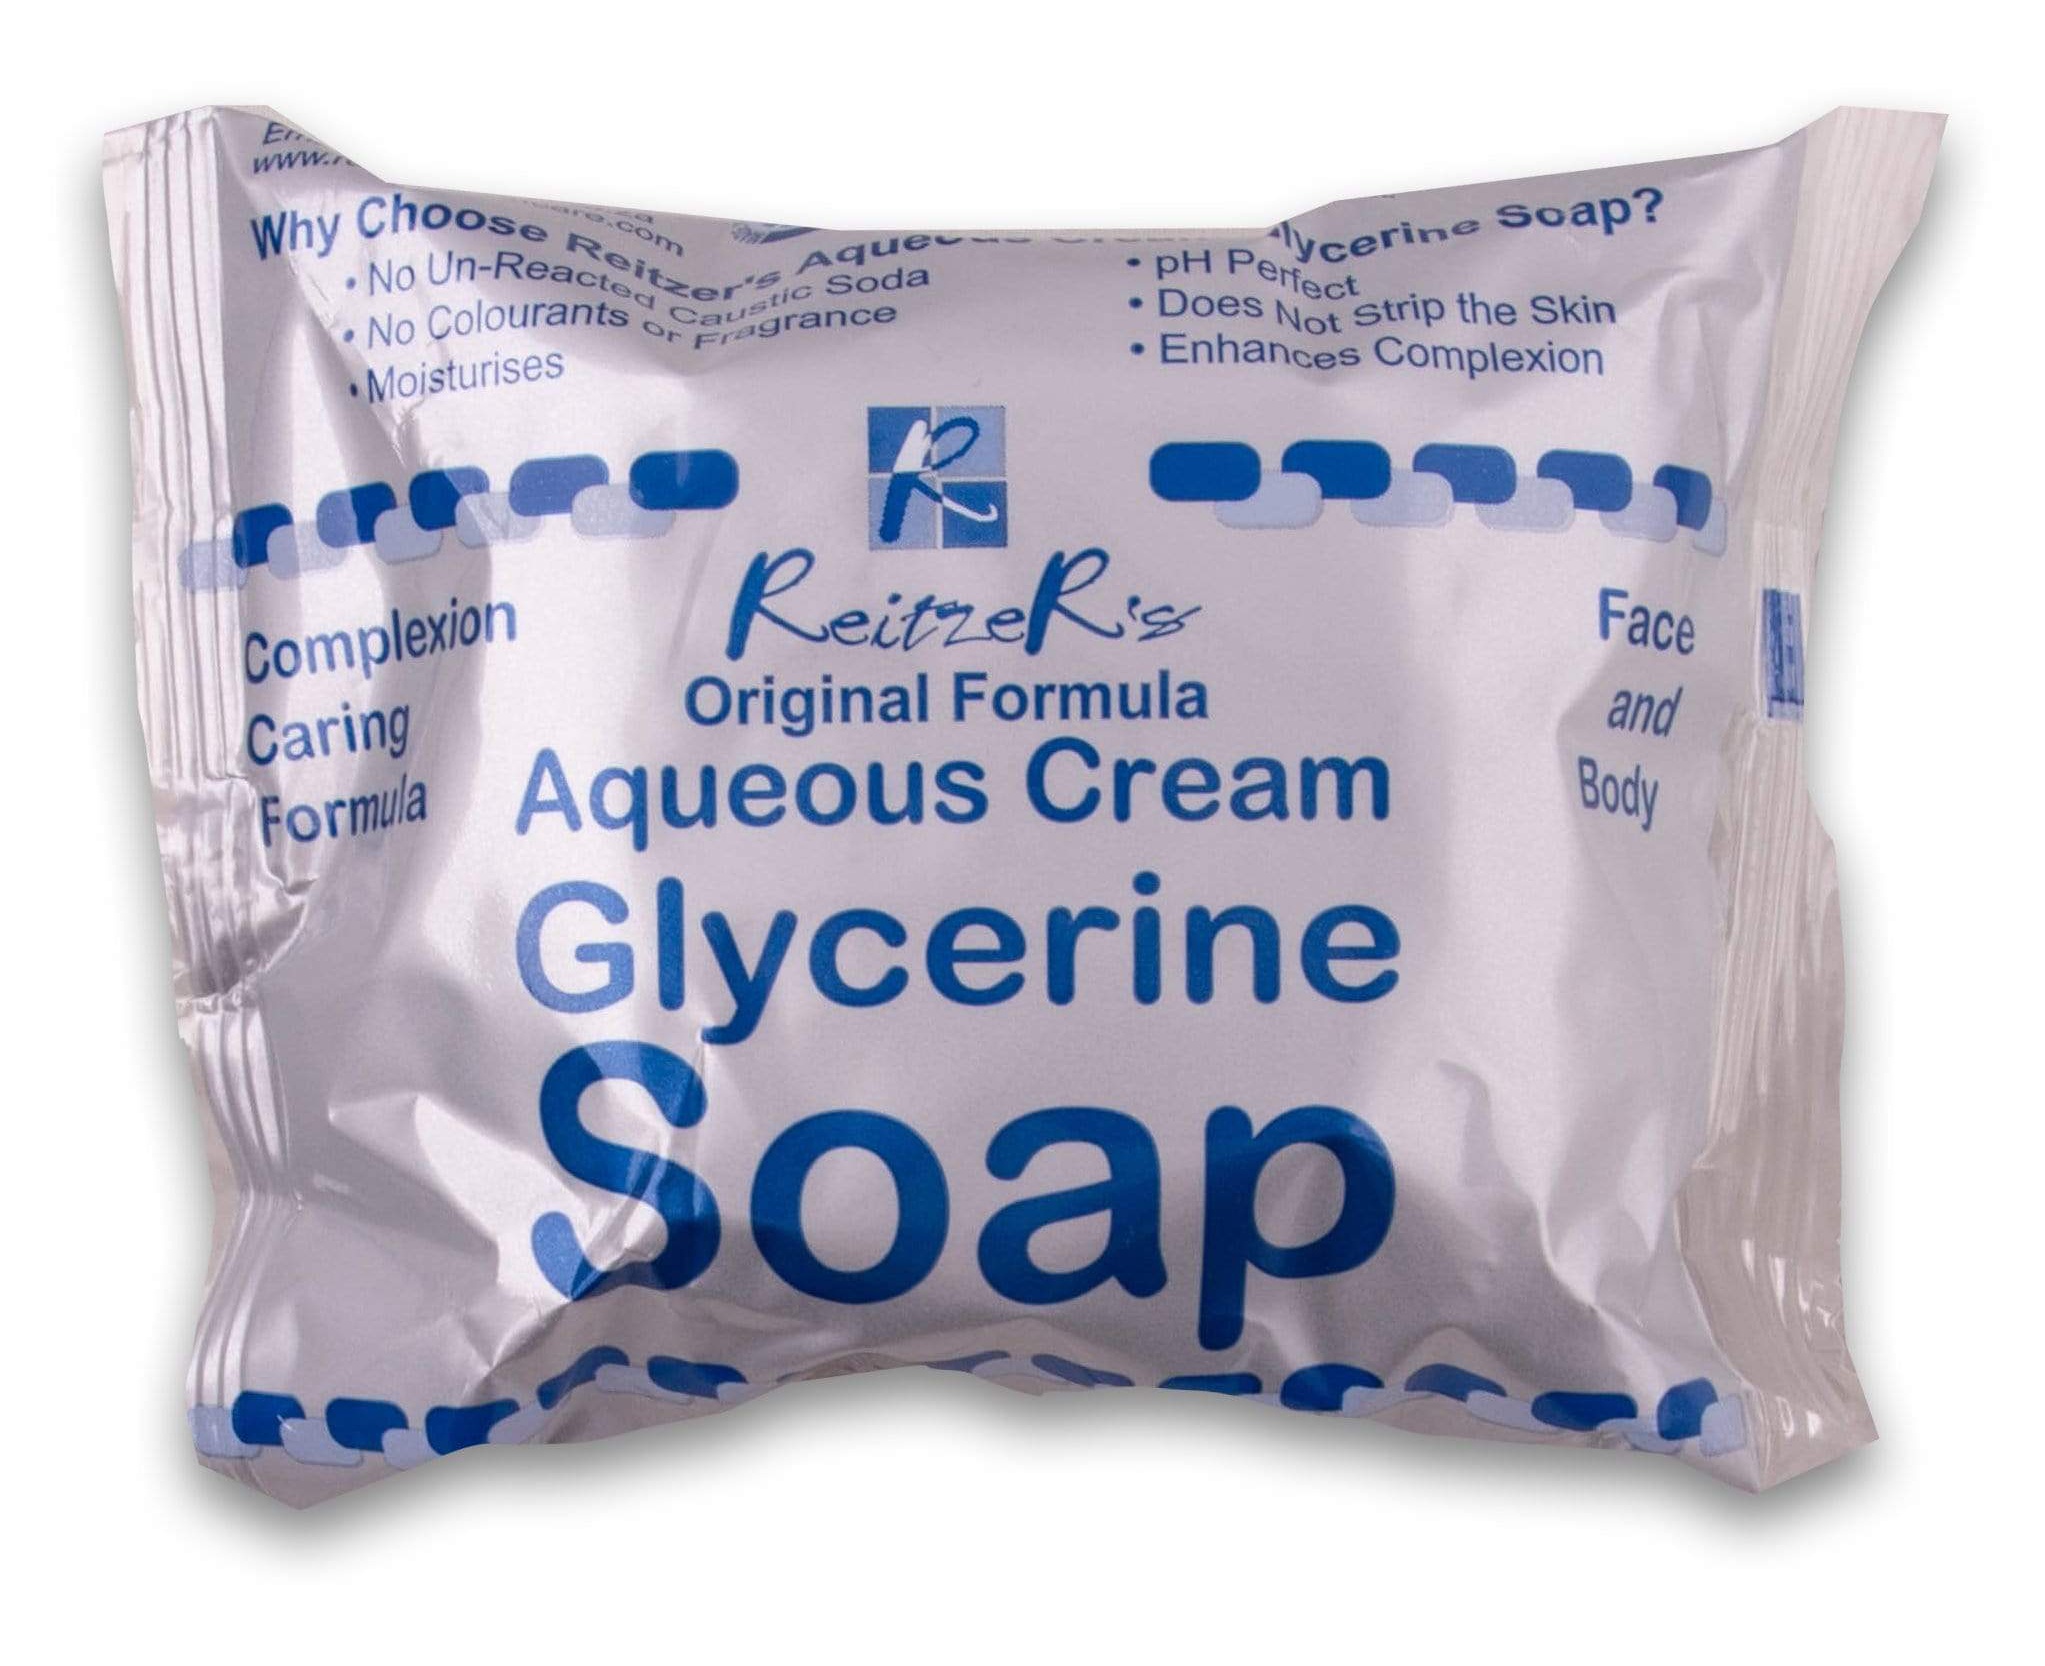 Reitzer's Aqueous Cream Glycerin Soap